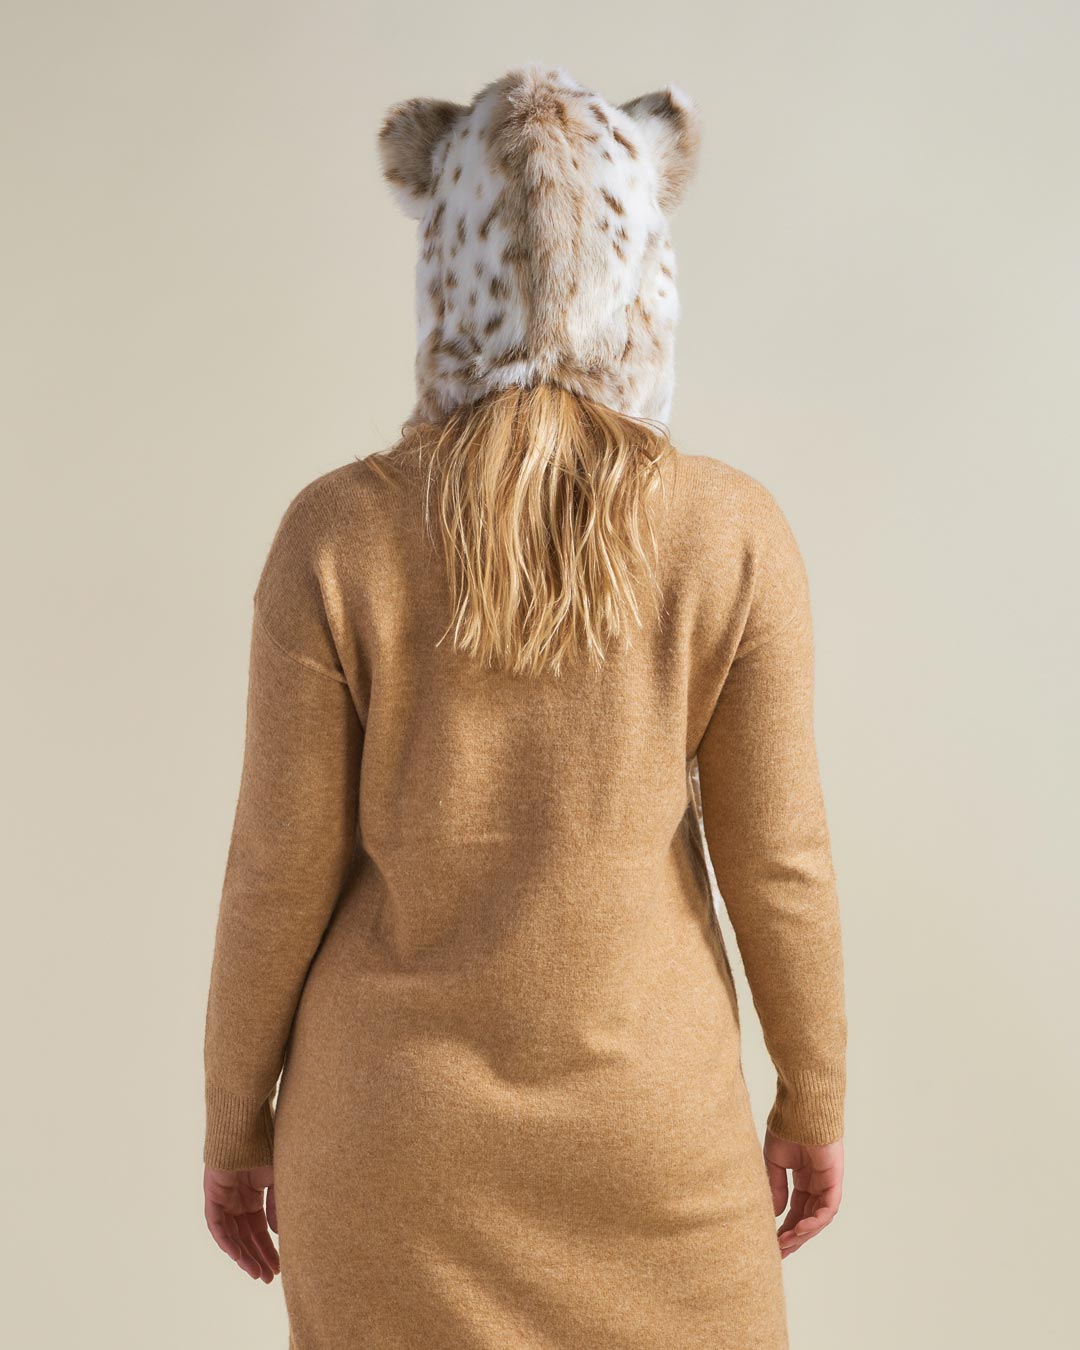 Snow Leopard Tan Faux Fur Women's Hood with Ears | SpiritHoods